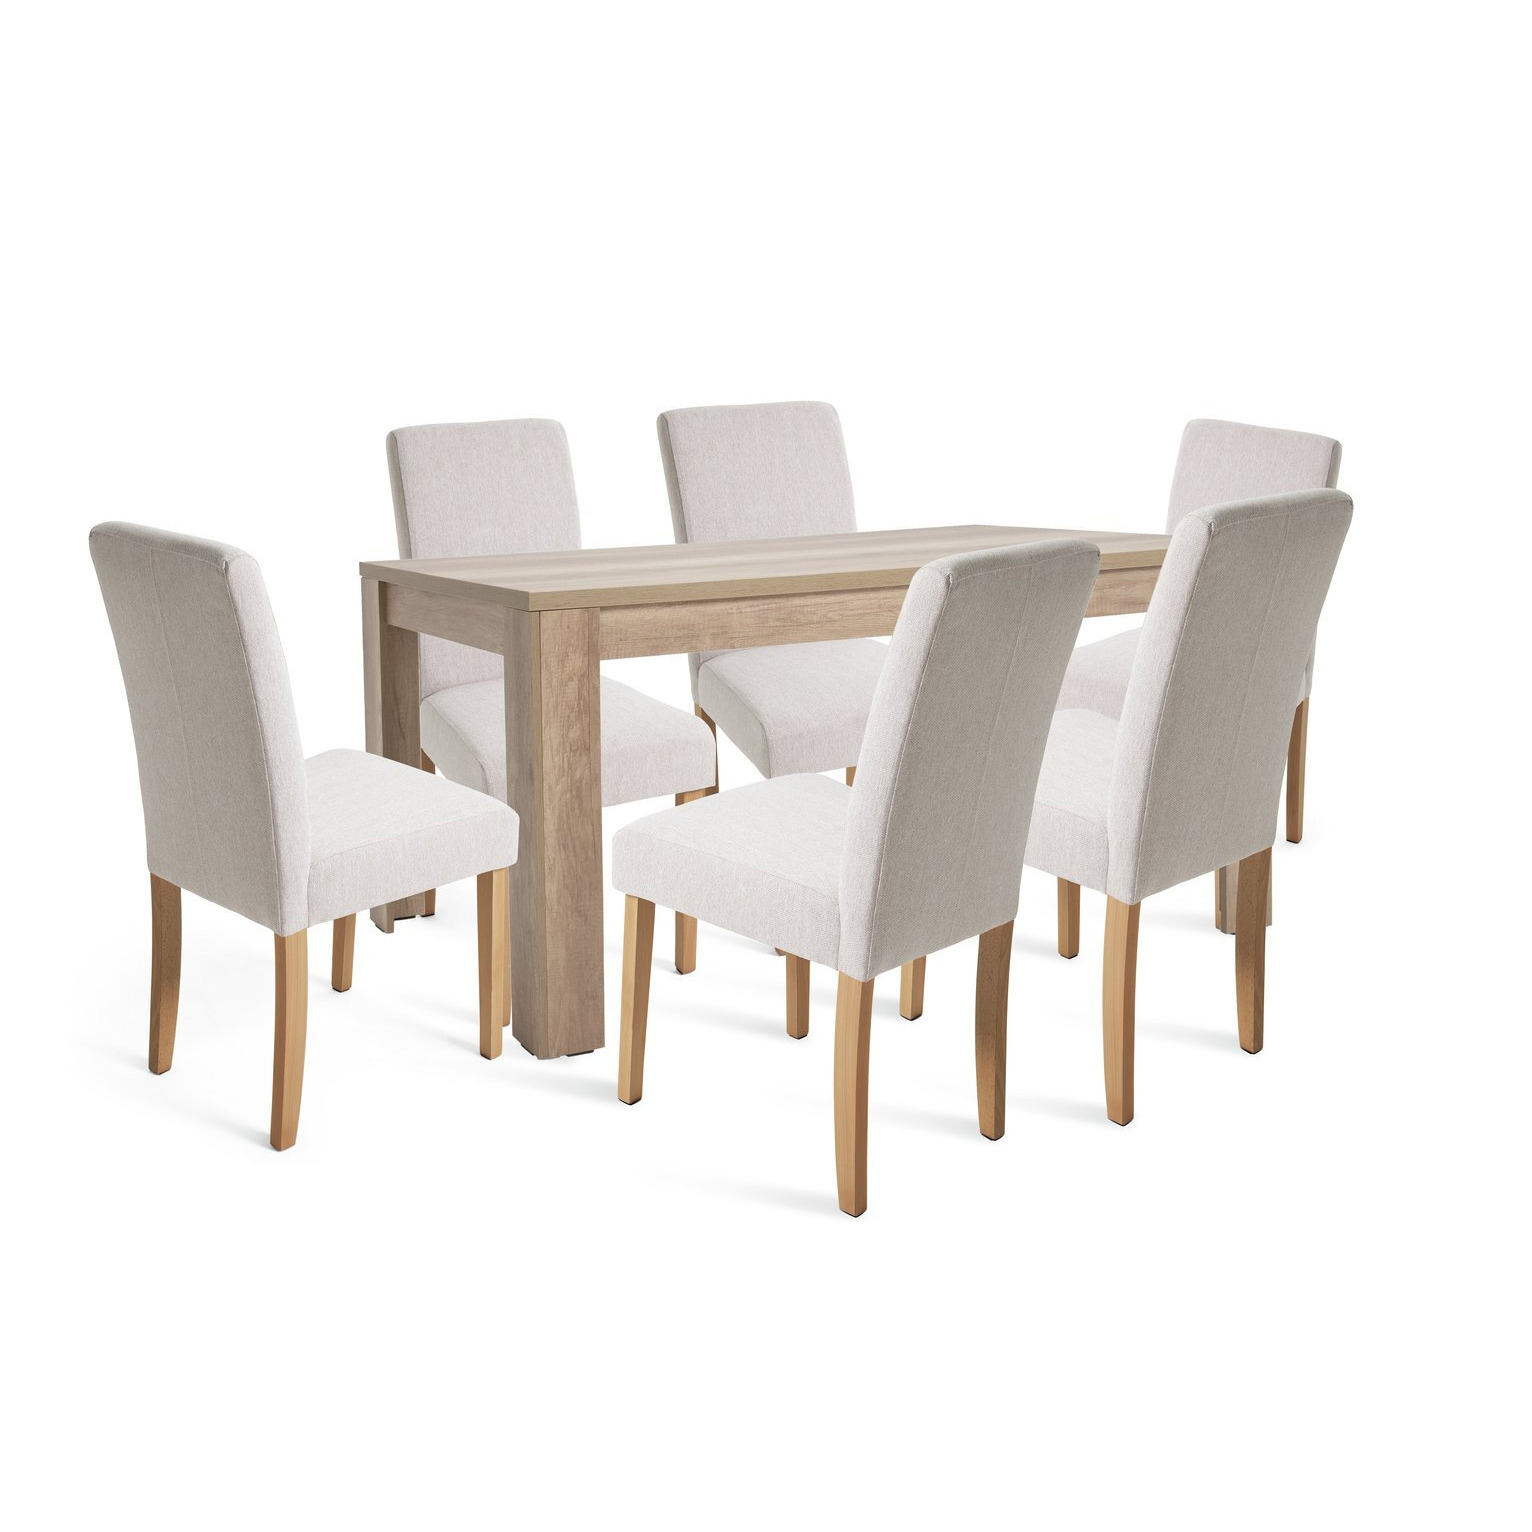 Argos Home Preston Dining Table & 6 Cream Chairs - image 1